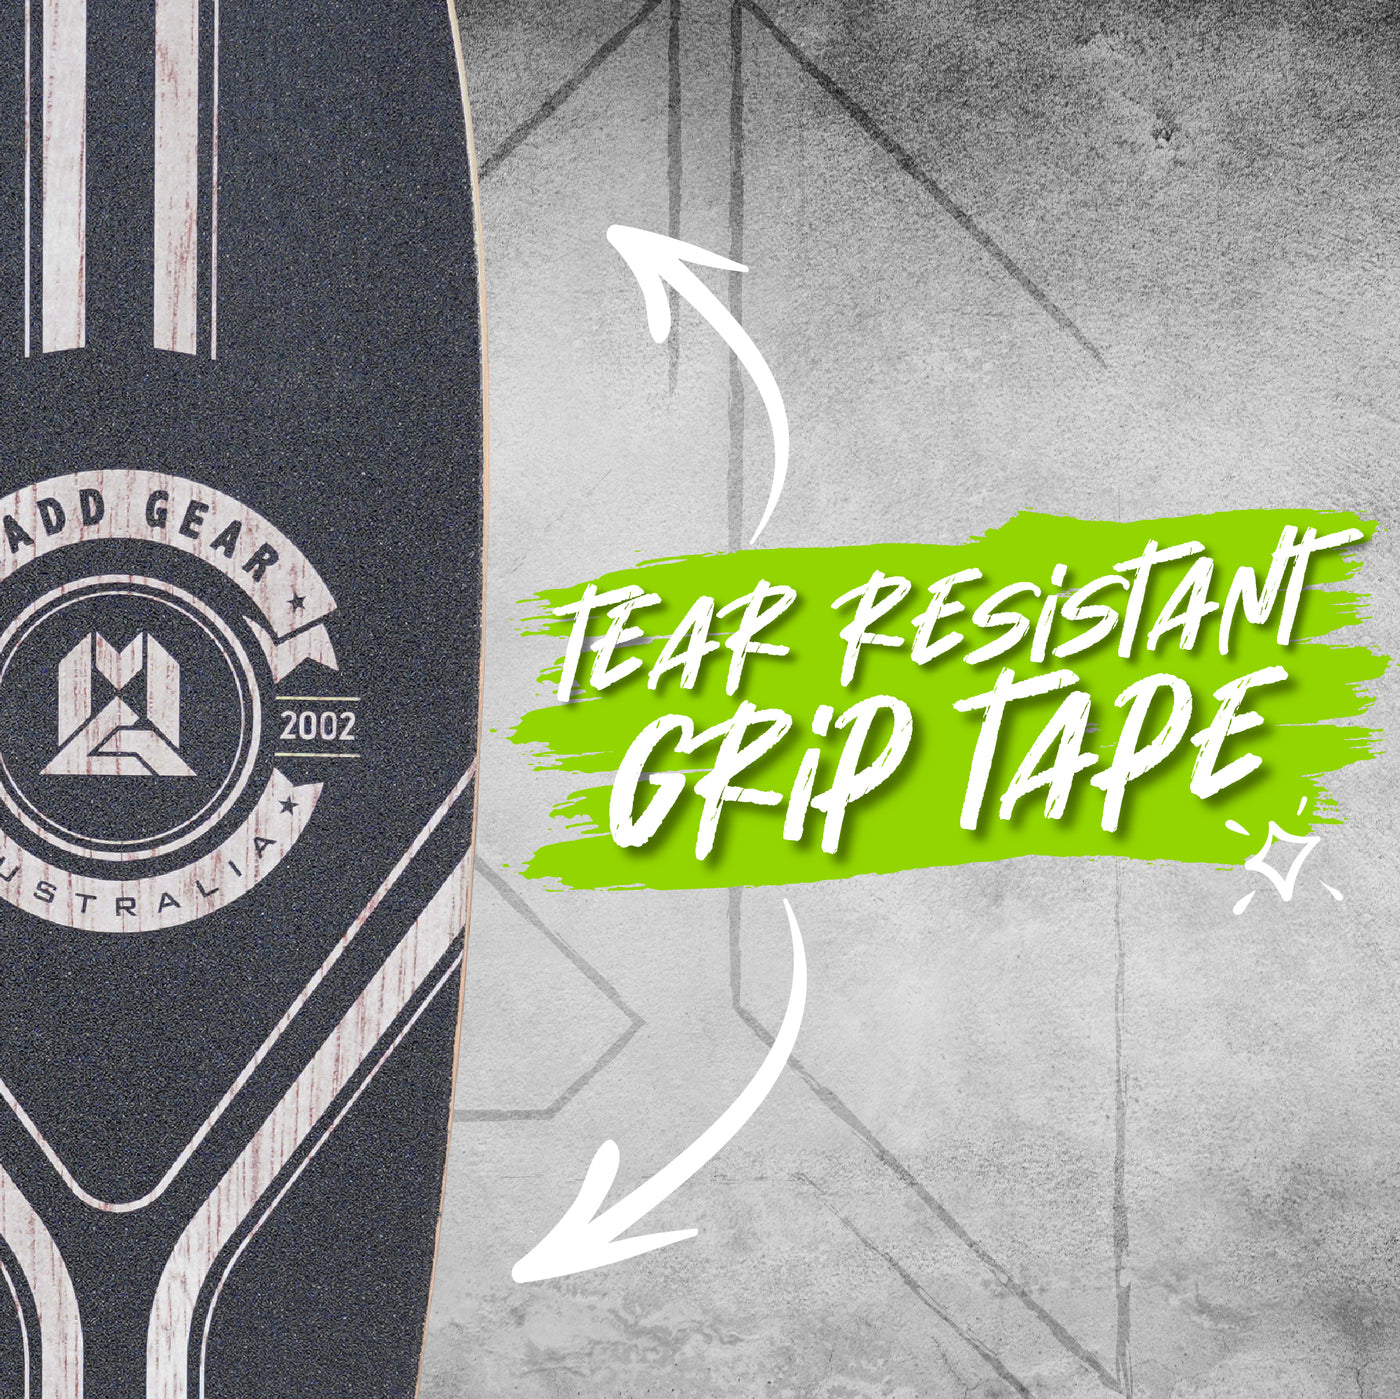 Madd Gear 36" Longboard Complete Skateboard Maple Kids Childrens High Quality Aluminum Trucks Blue Grip Tape